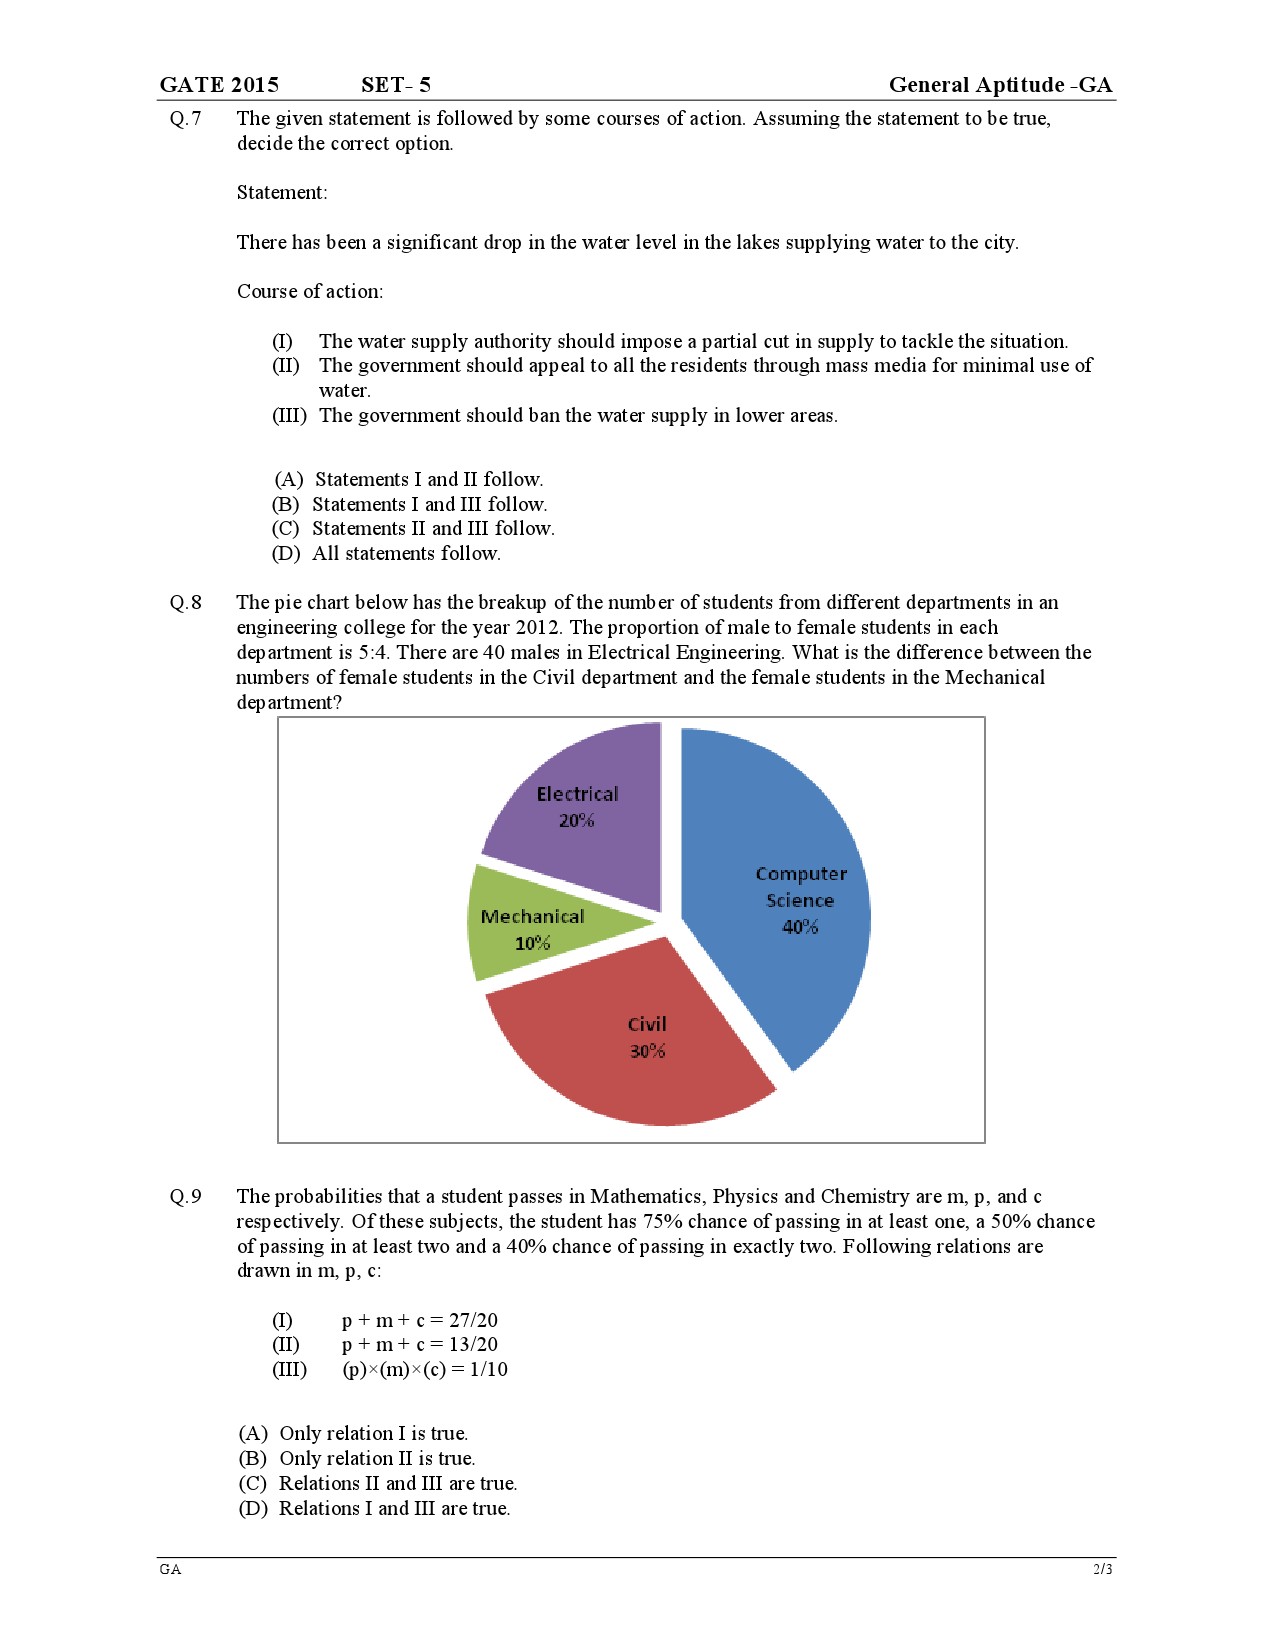 GATE Exam Question Paper 2015 General Aptitude 10